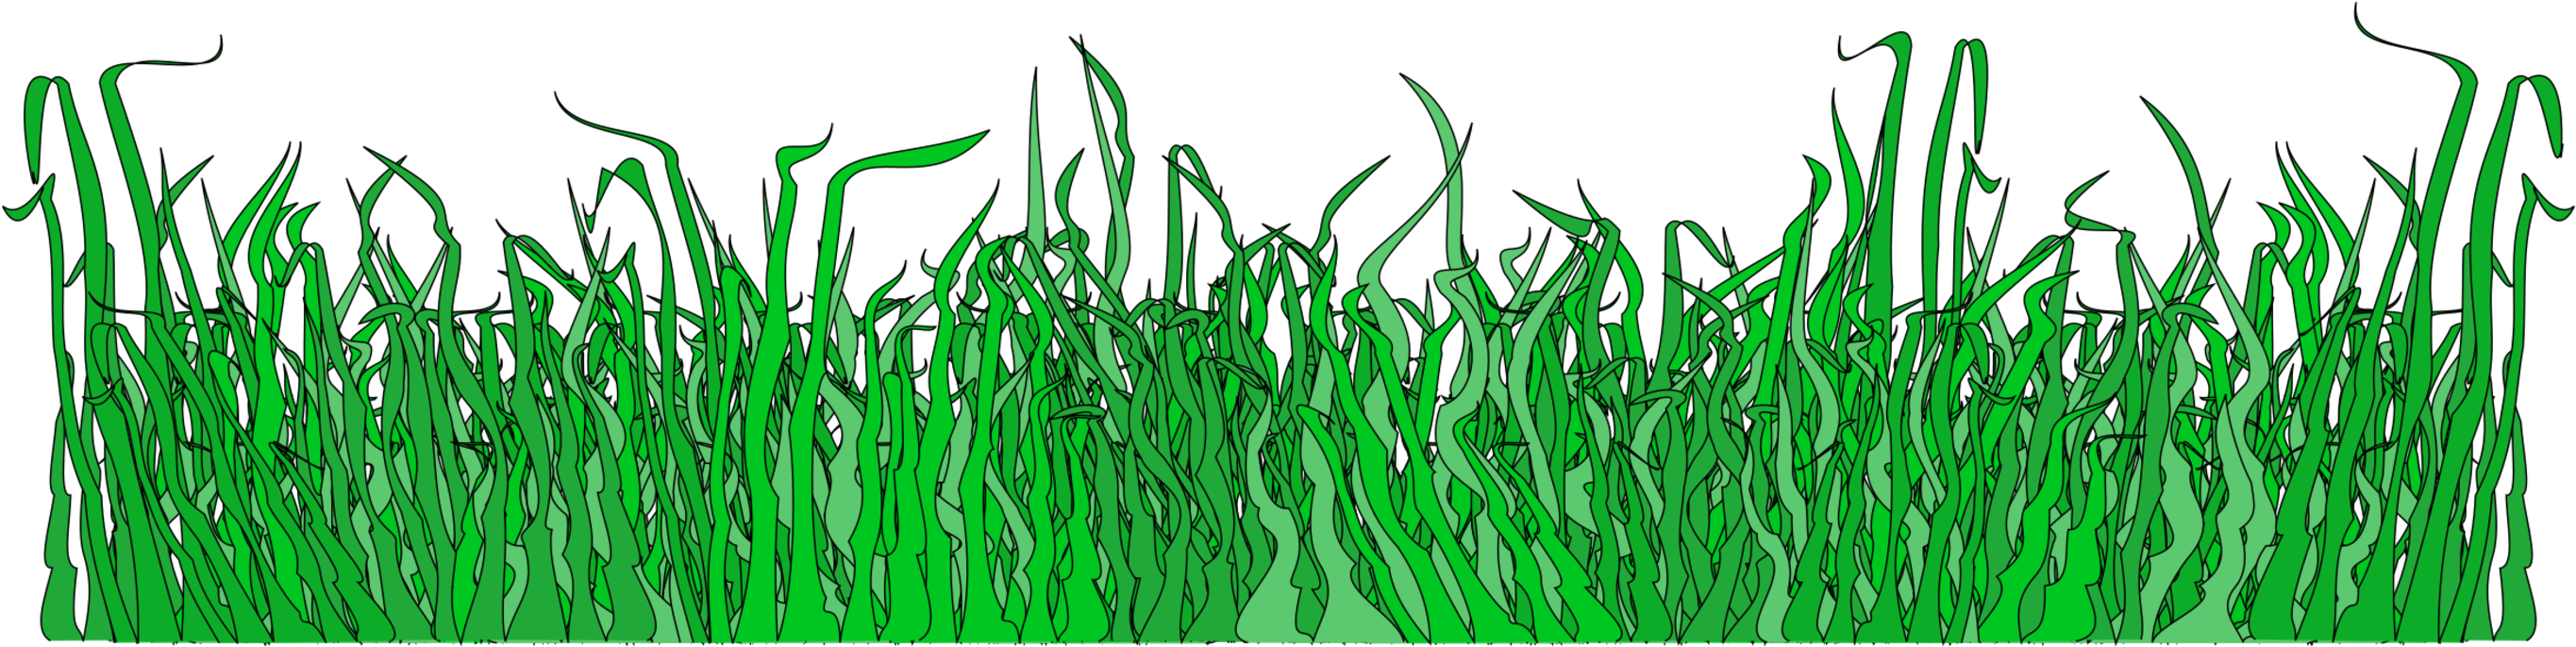 Green Grass Border Graphic